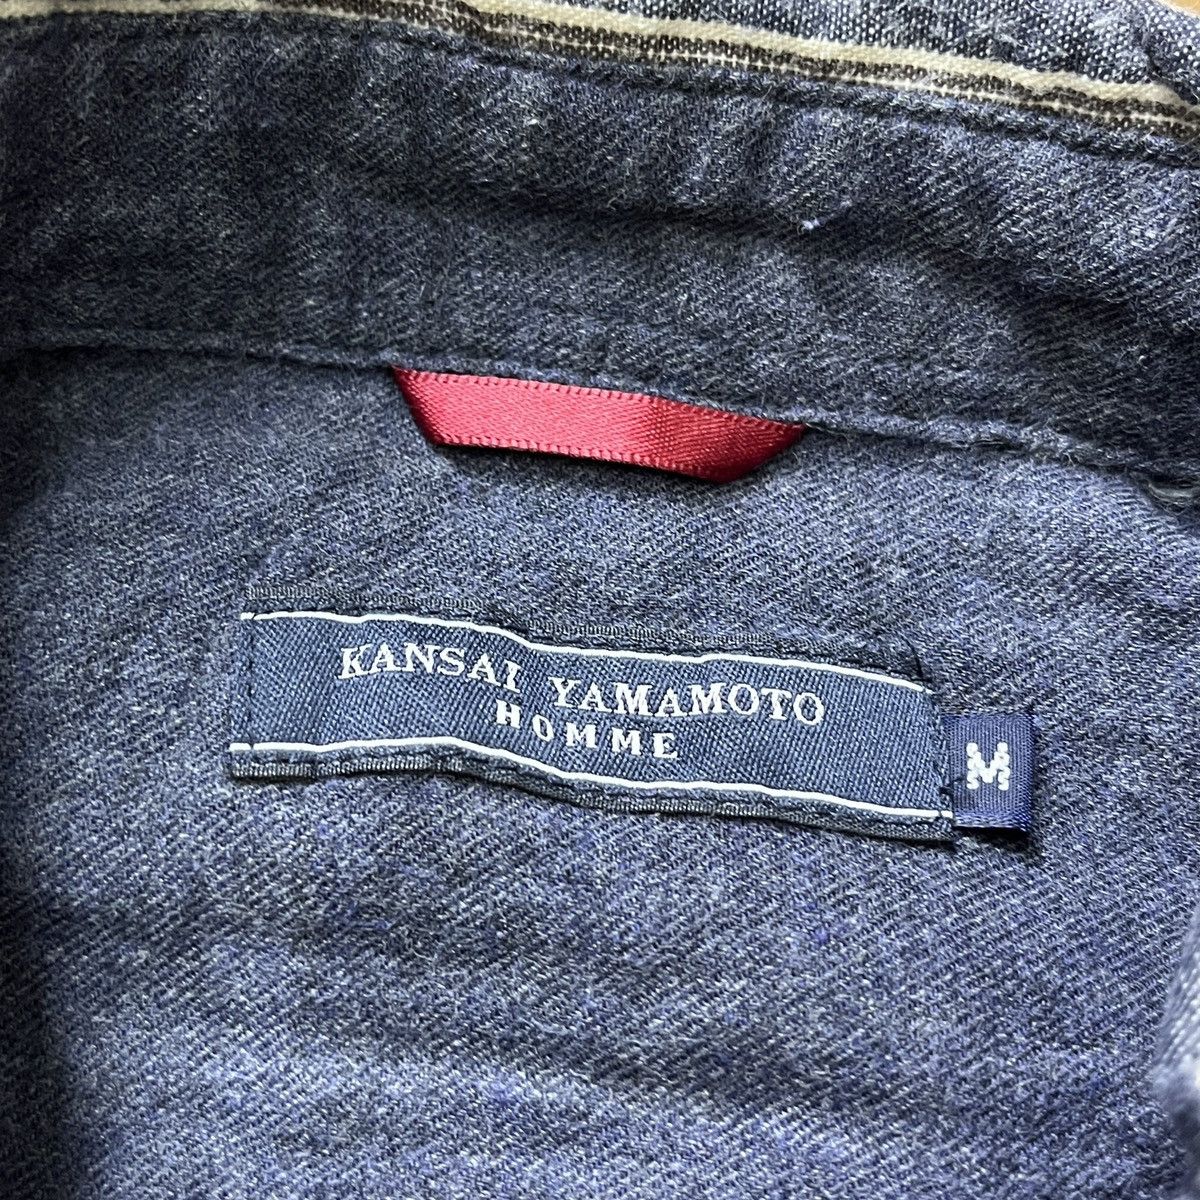 Vintage - Grails Kansai Yamamoto Button Up Shirts Japan Designer - 5